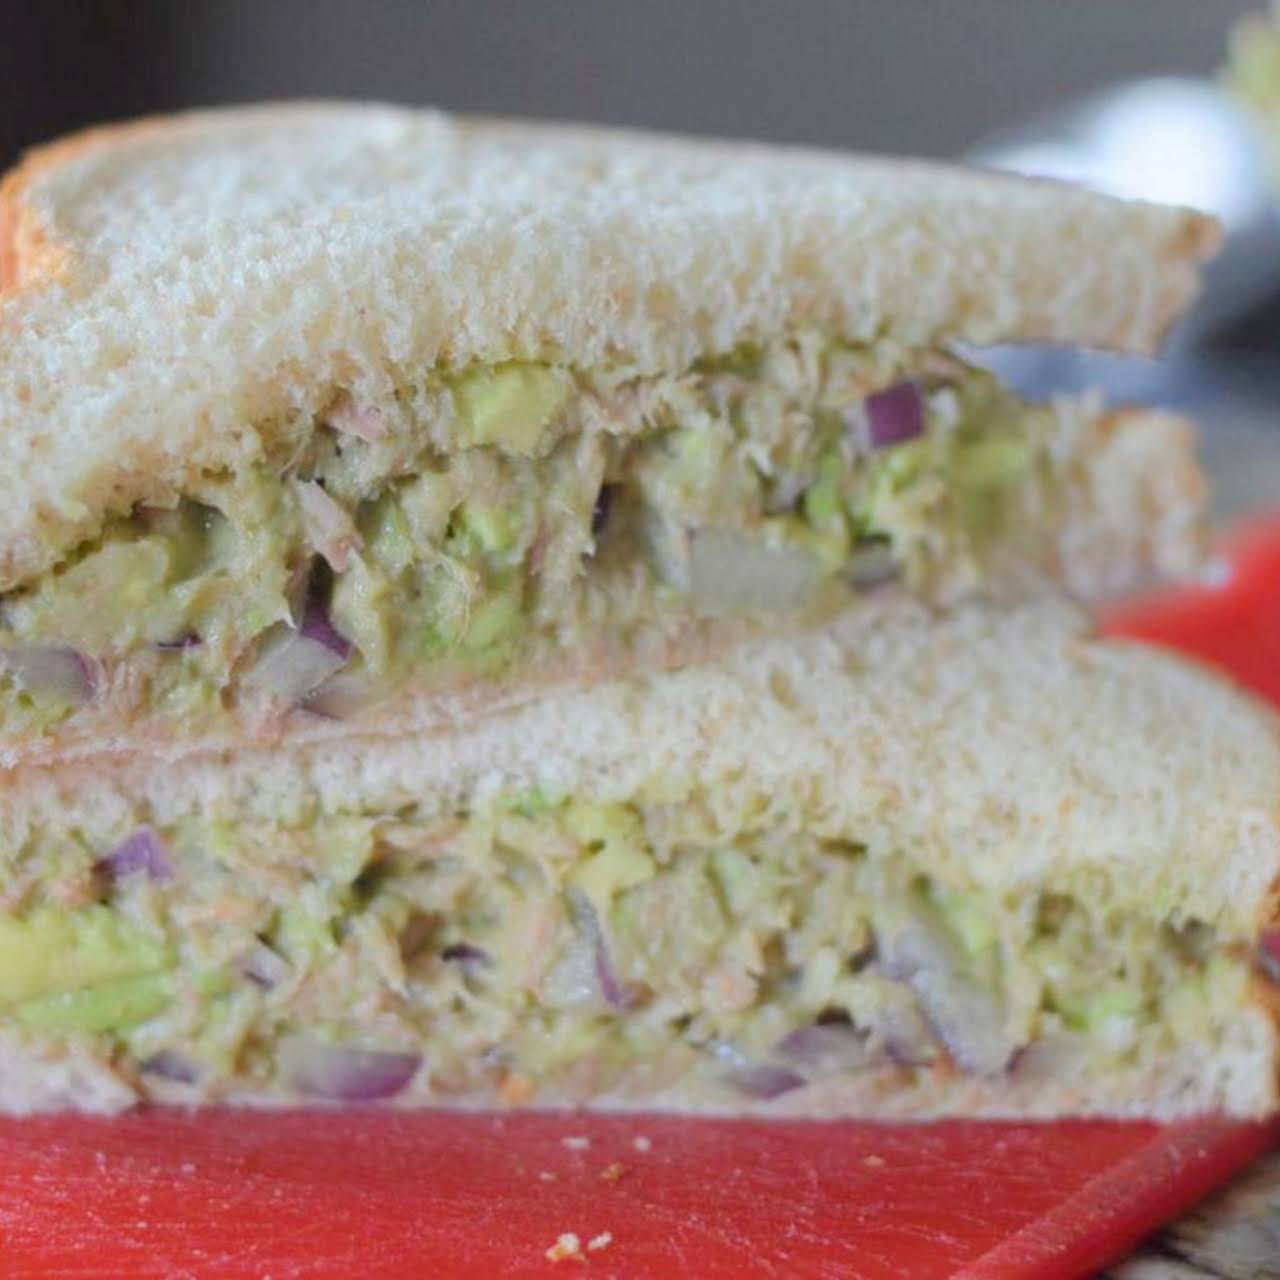 Avocado Tuna Sandwich